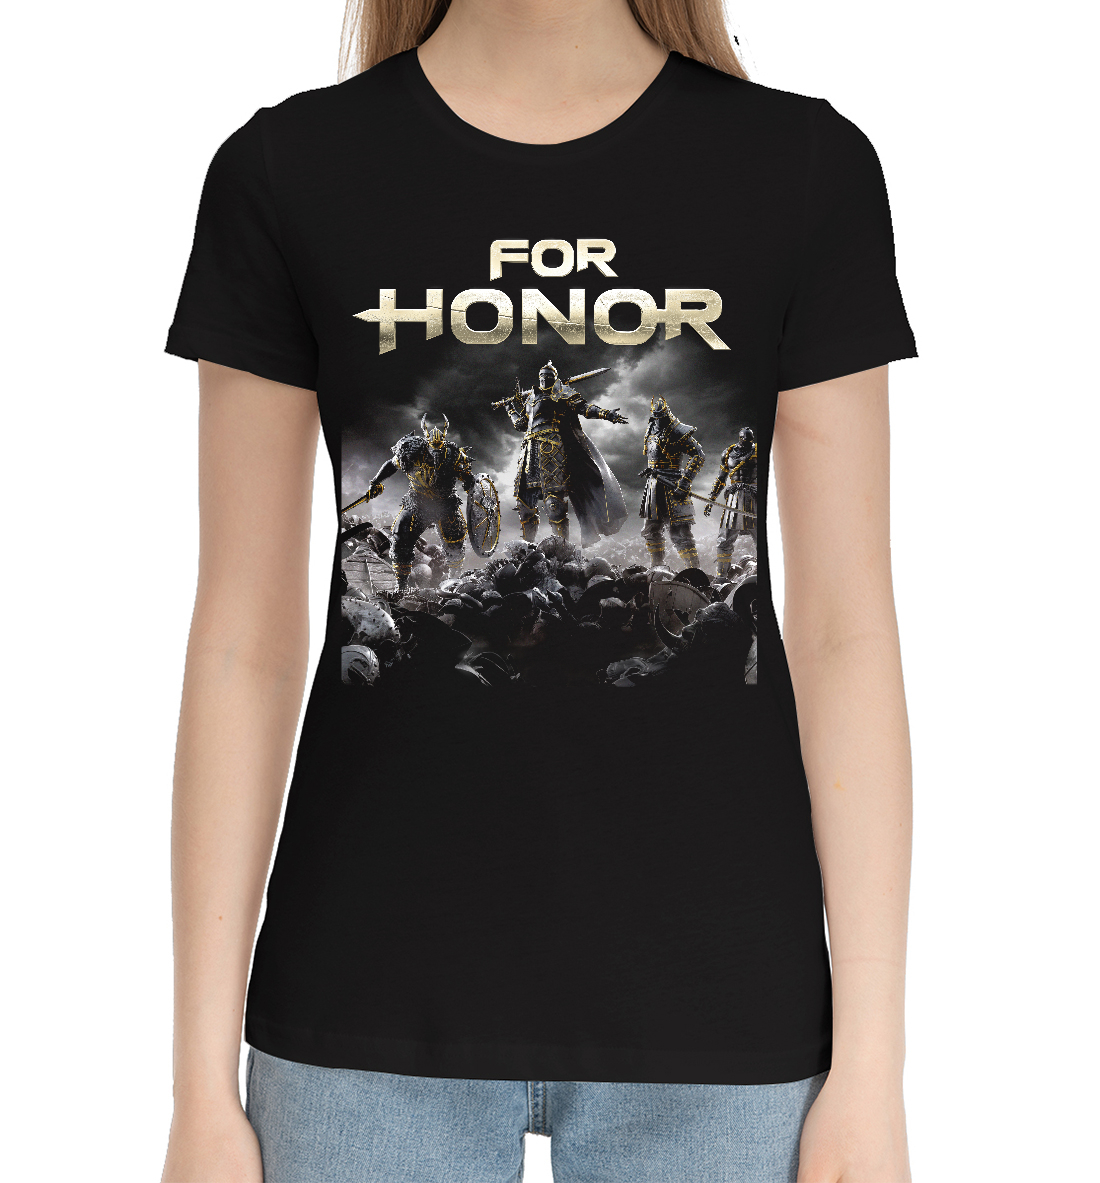 Женская Хлопковая футболка с принтом For honor, артикул RPG-333215-hfu-1mp